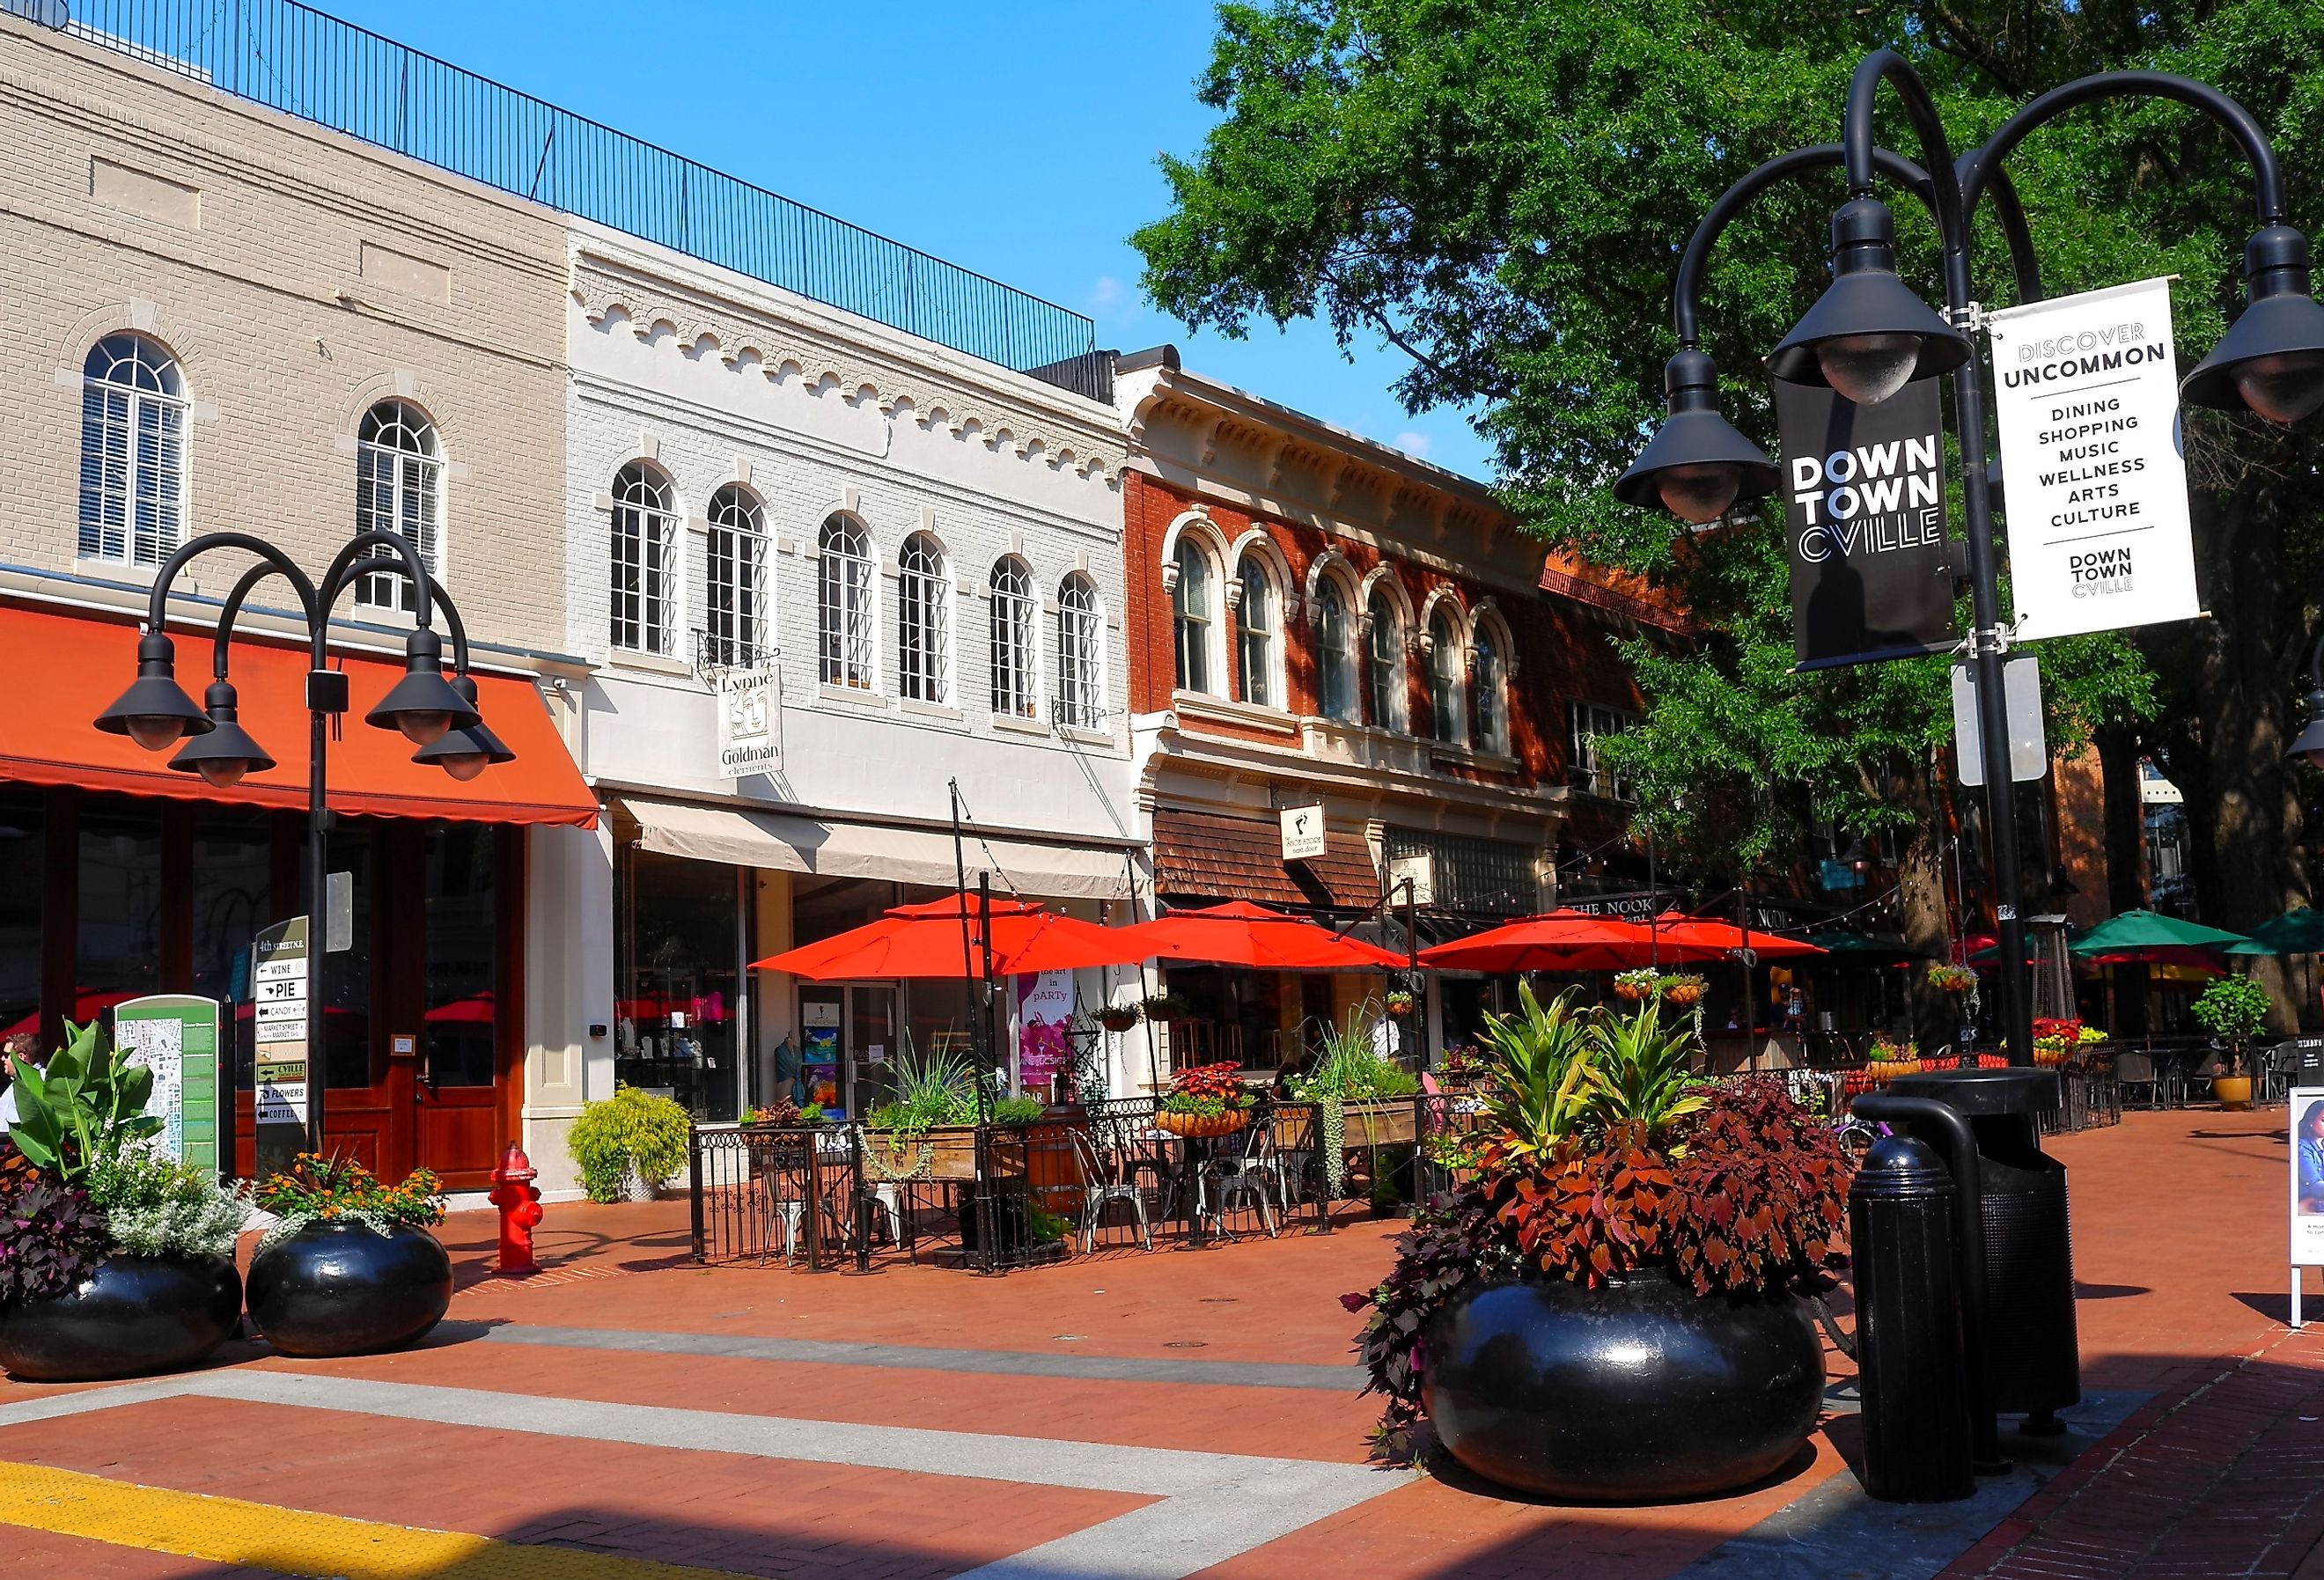 The Downtown Mall in Charlottesville, VA USA. Image credit ImagineerInc via Shutterstock.